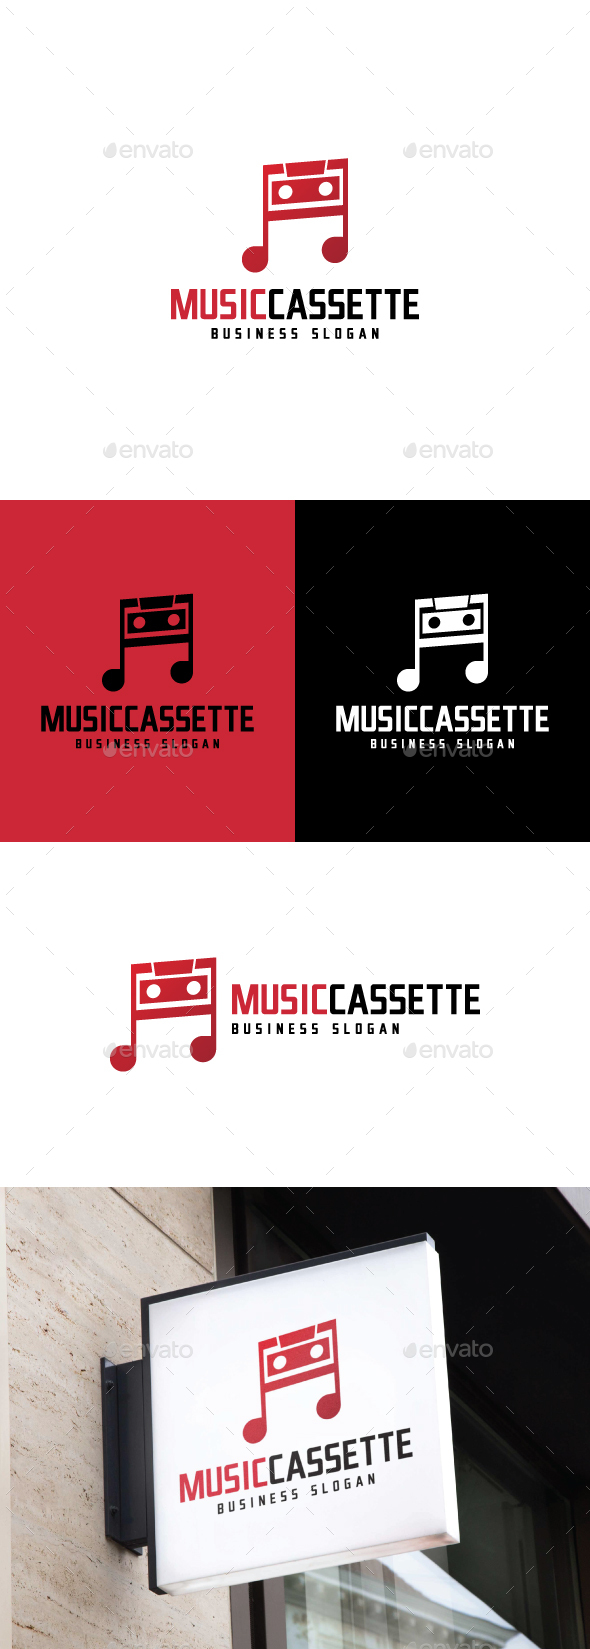 [DOWNLOAD]Music Cassette Logo